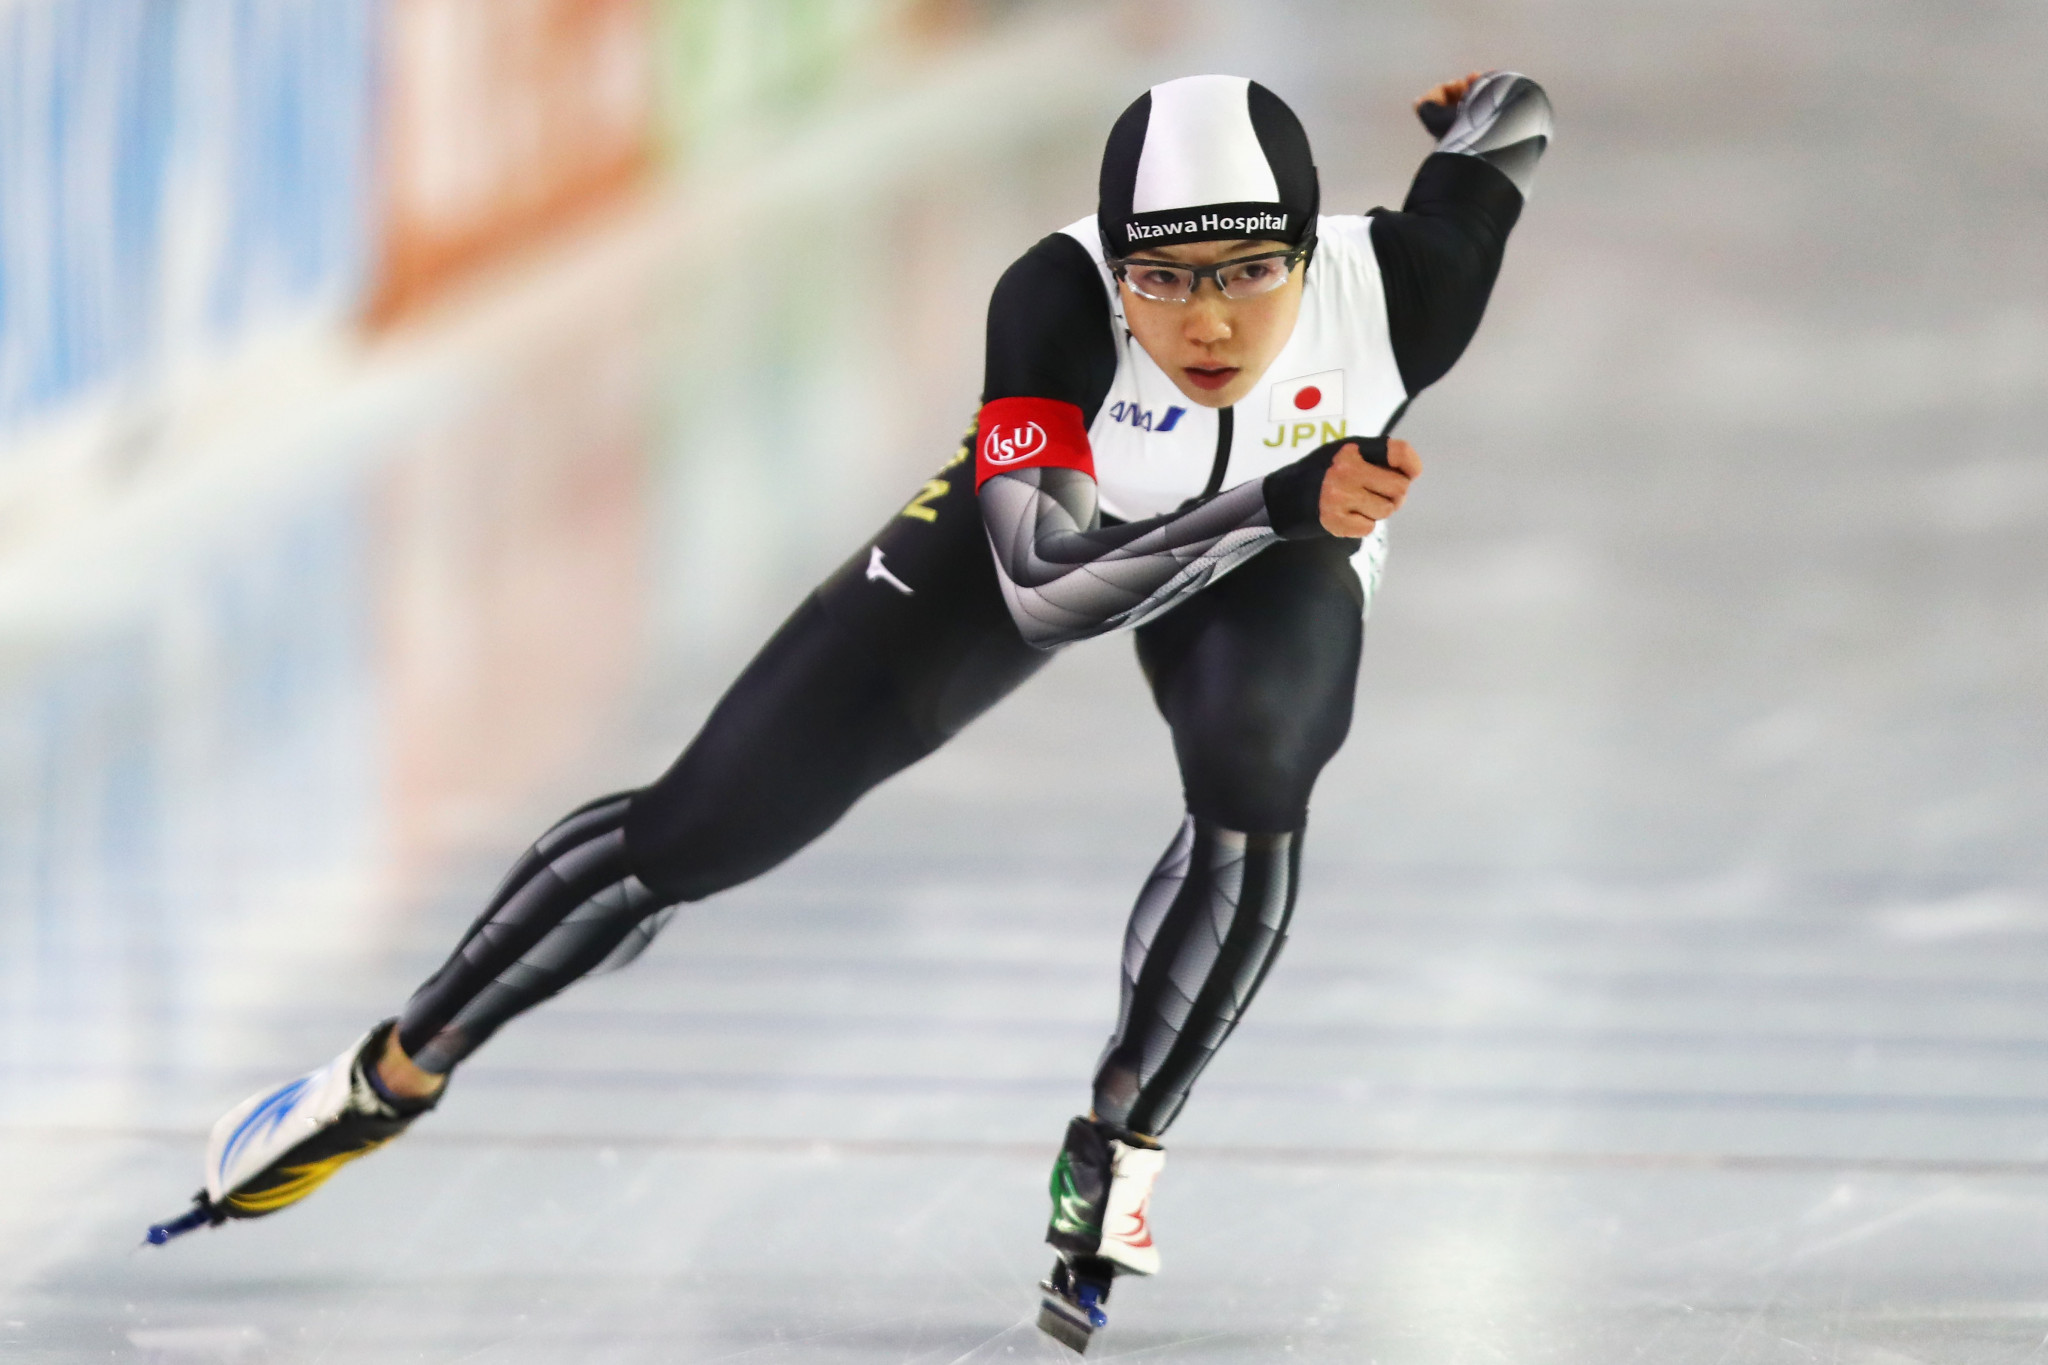 Japan's Nao Kodaira took the women's title at the ISU World Sprint Speed Skating Championships in Heerenveen ©Getty Images